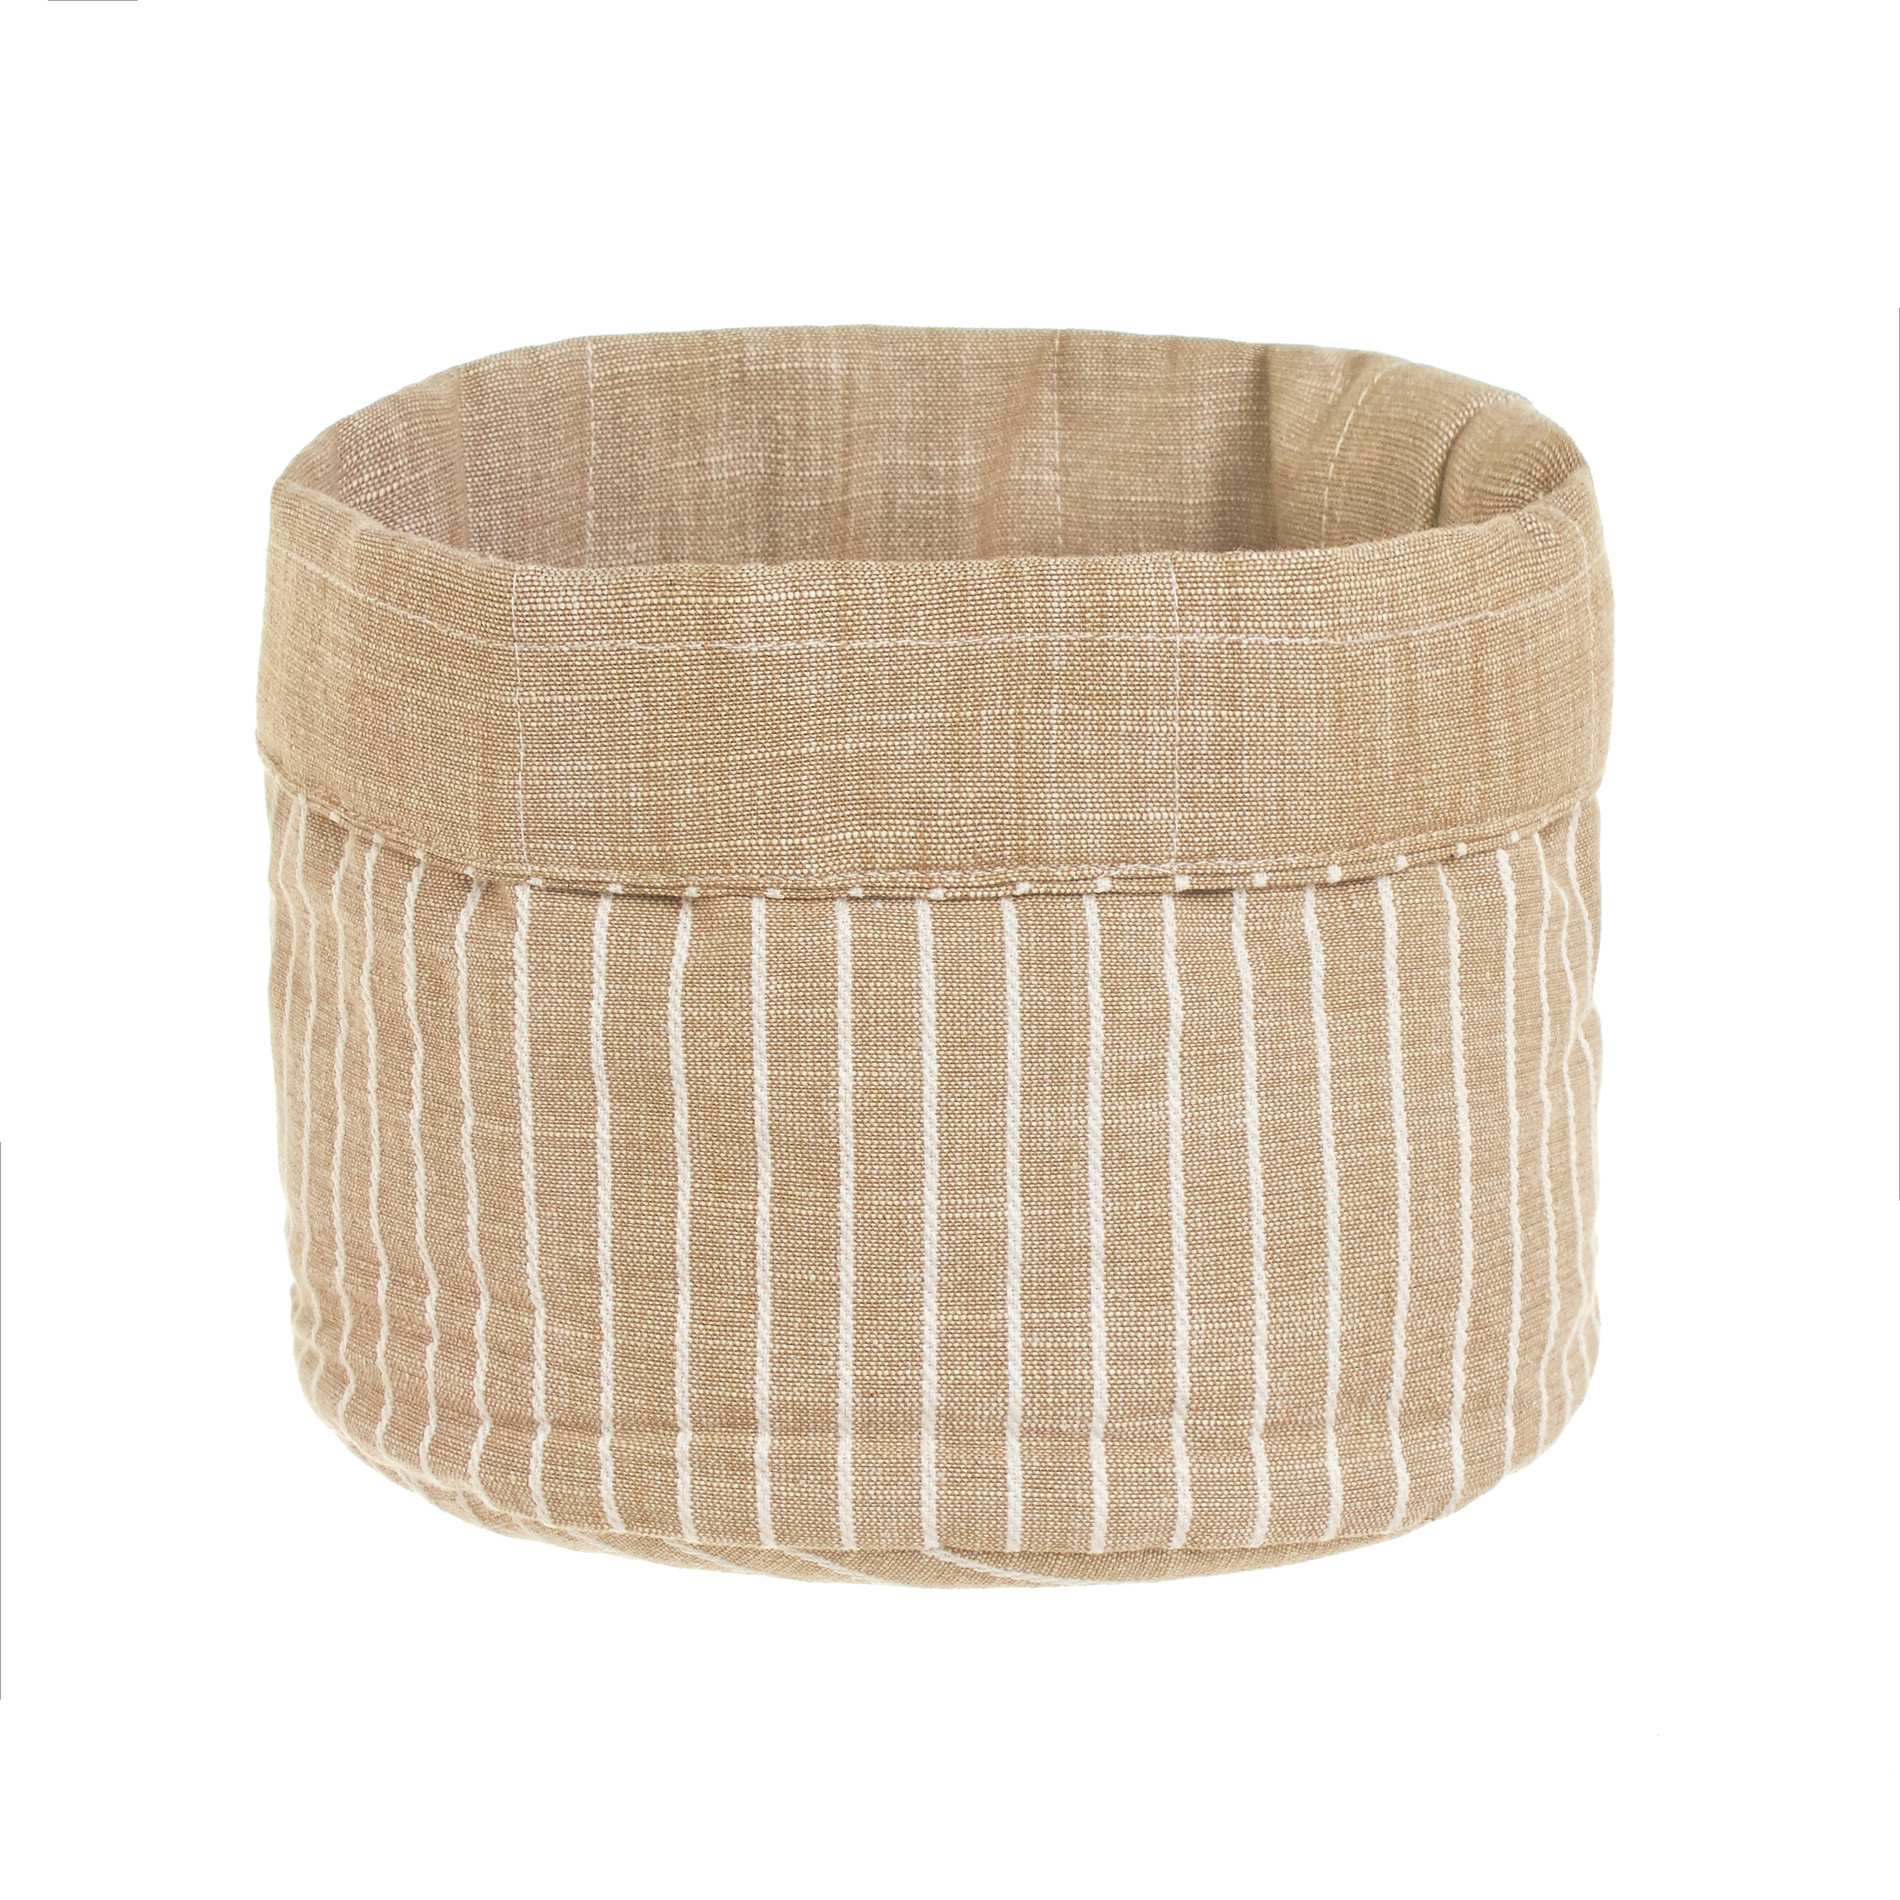 100% shot cotton basket with stripes, White / Beige, large image number 0